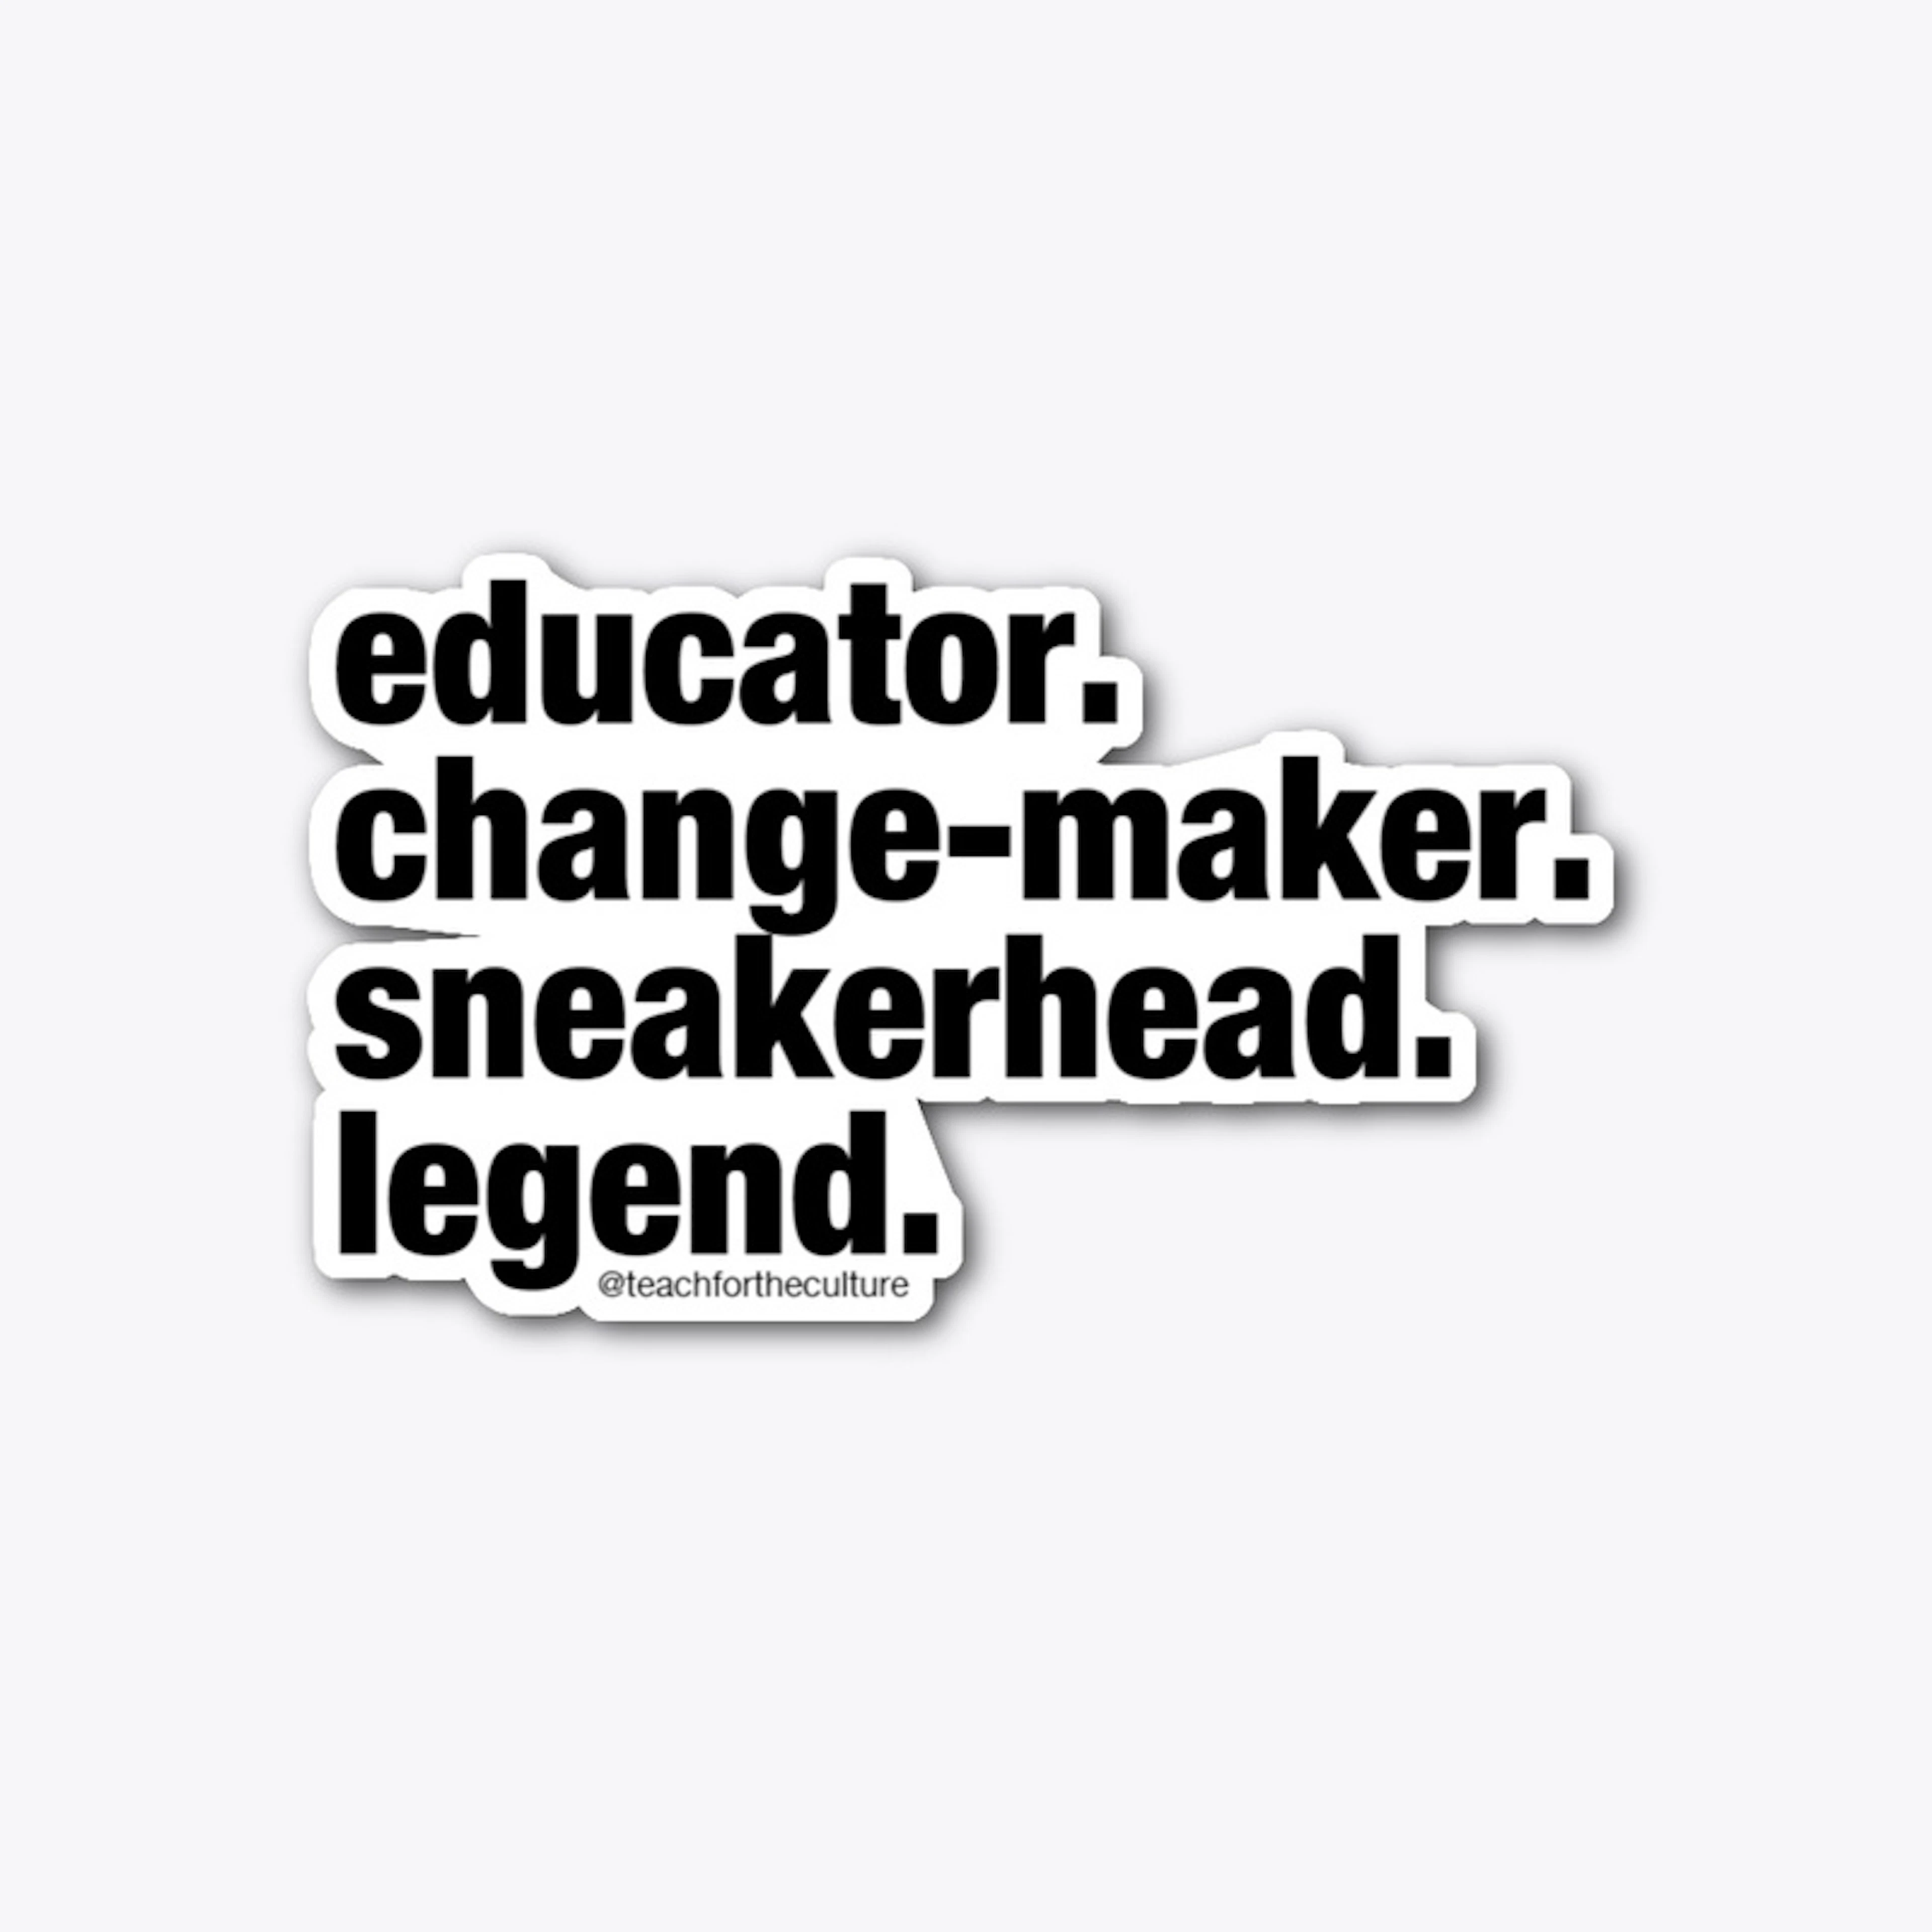 educator. change-maker. sneaker. legend